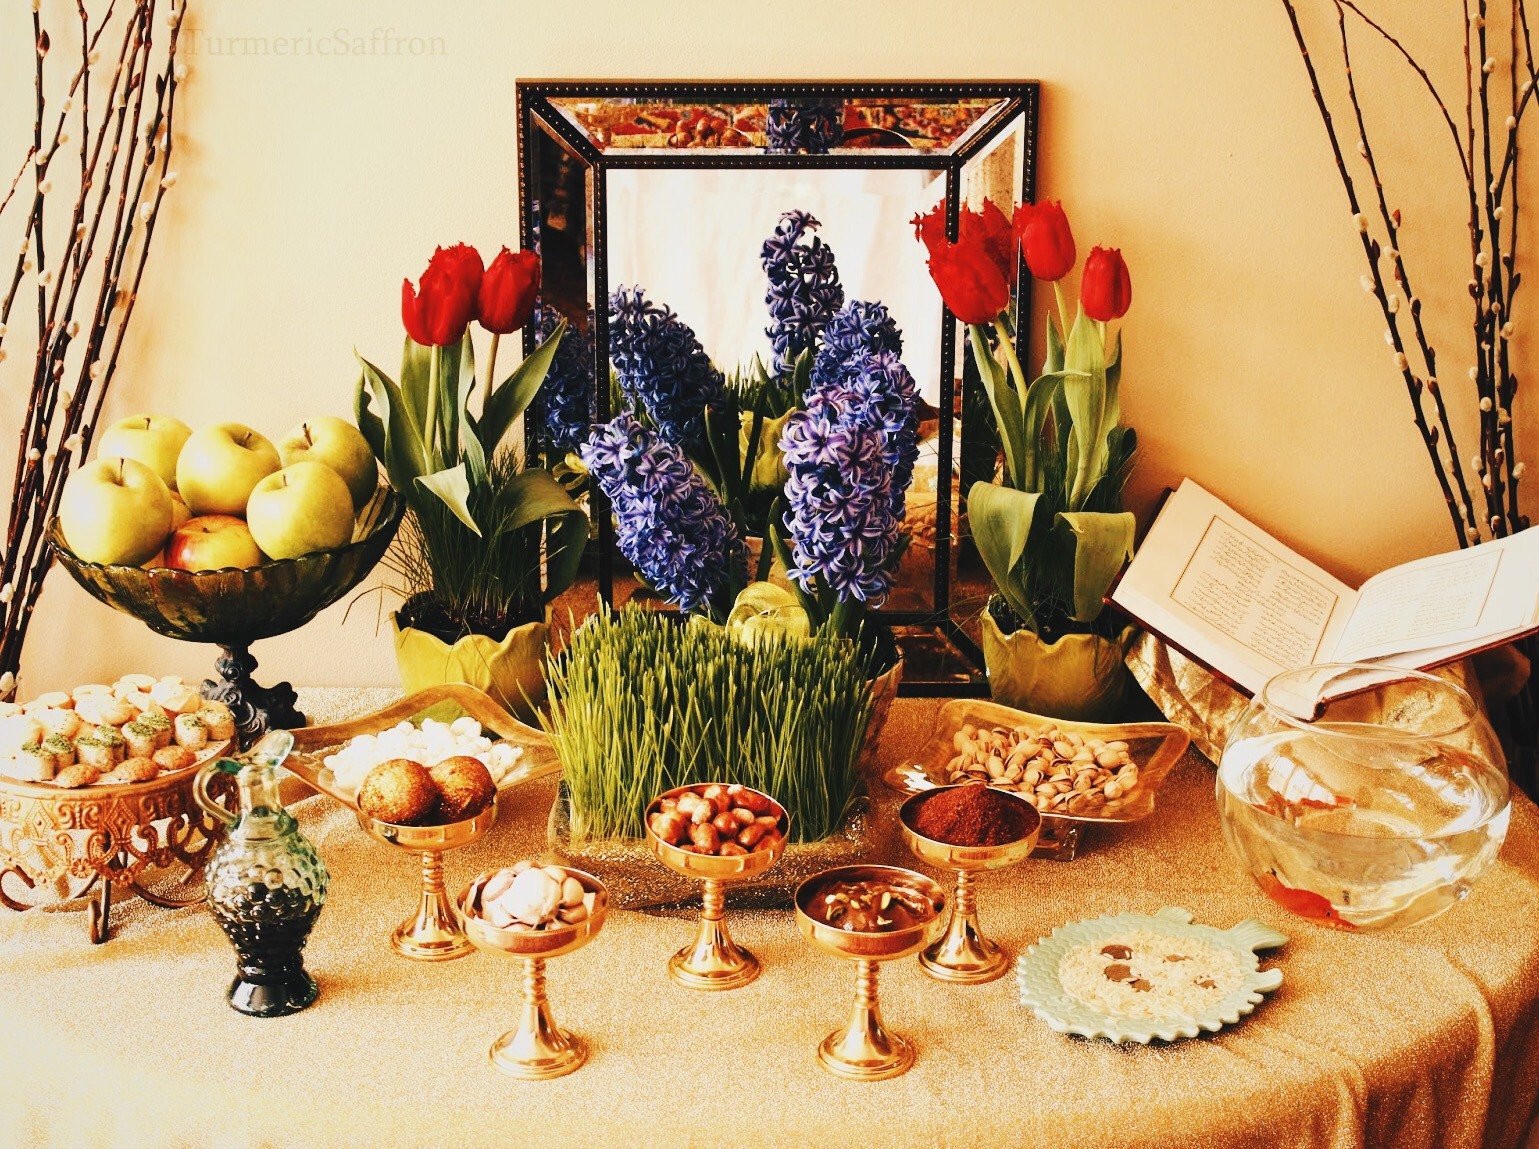 turmeric-saffron-haft-seen-photos-nowruz-2016